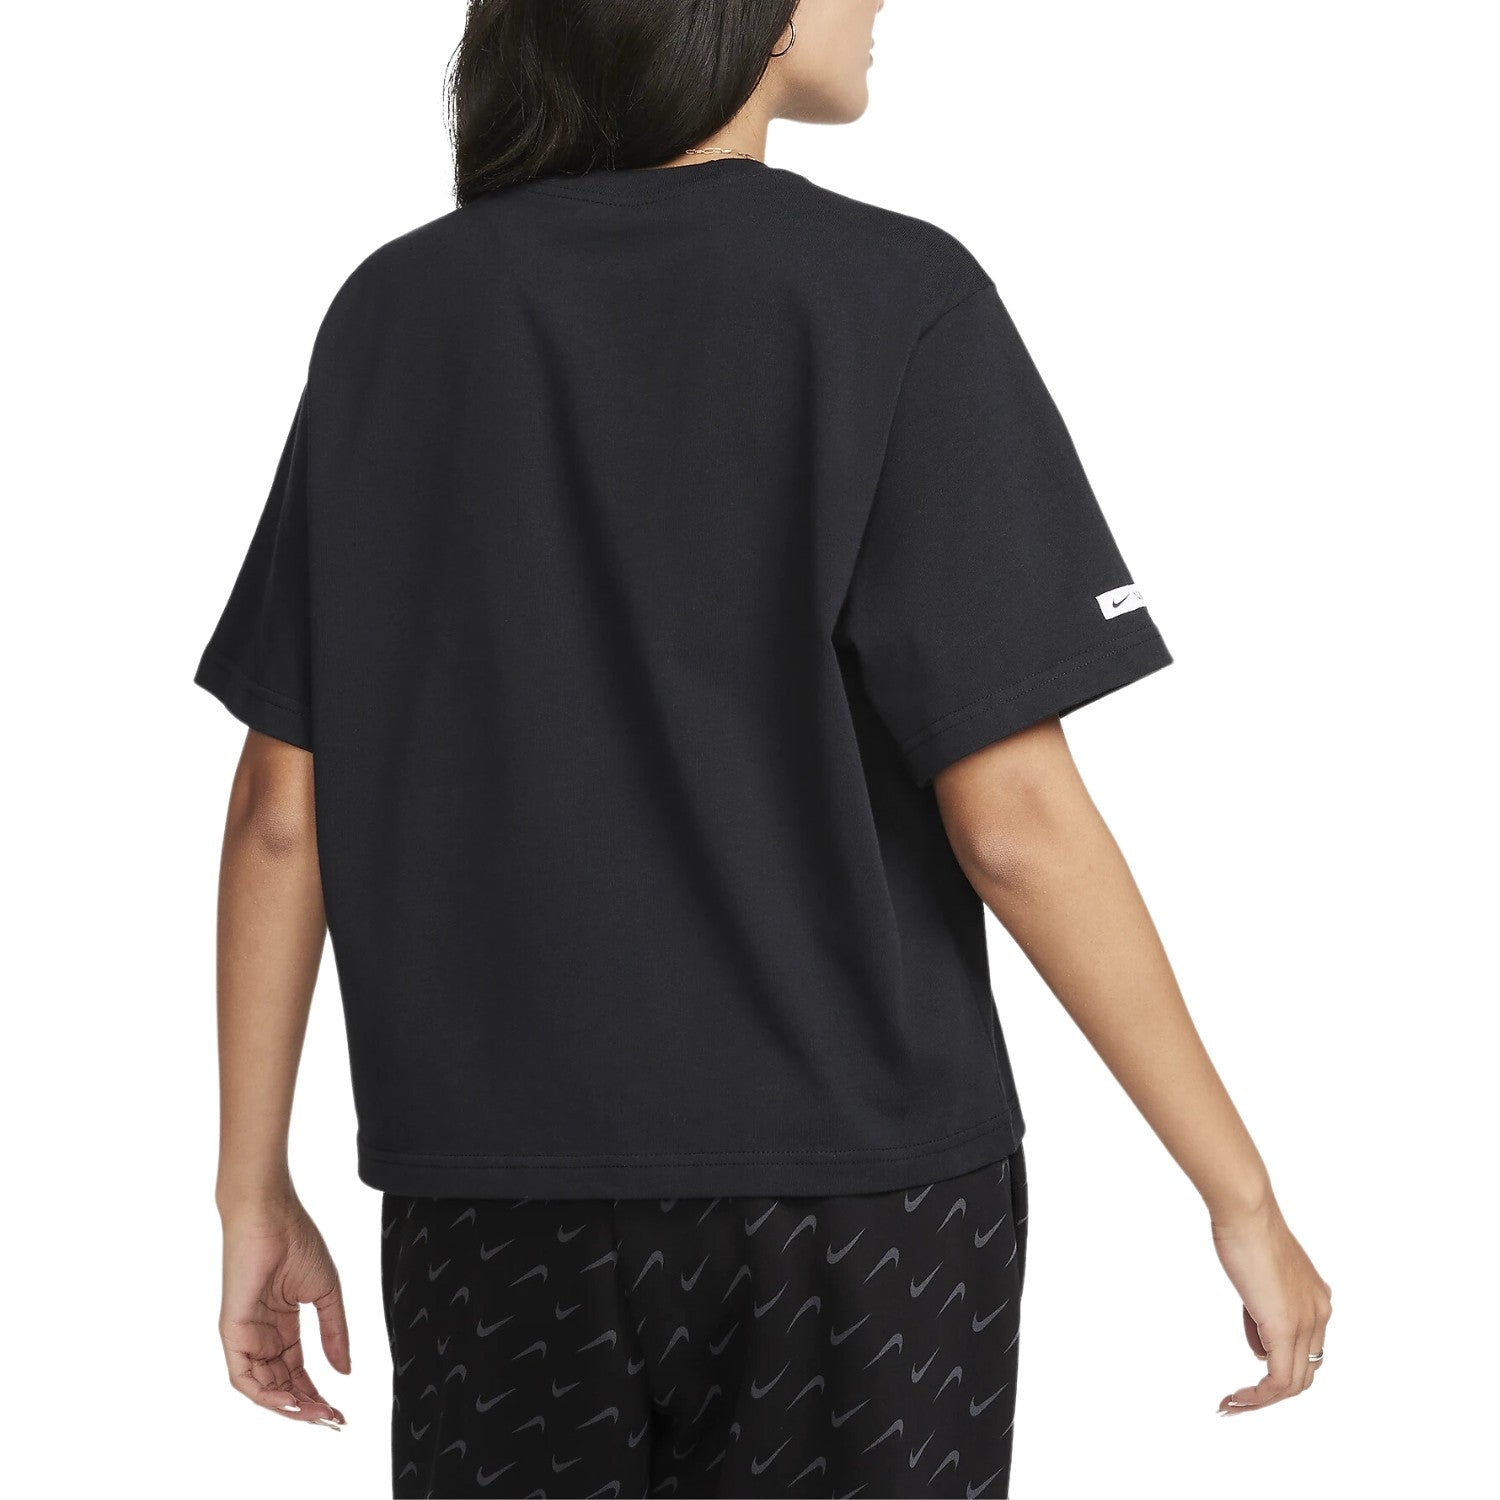 Nike Sportswear Classic Women's T-shirt Womens Style : Fq6600